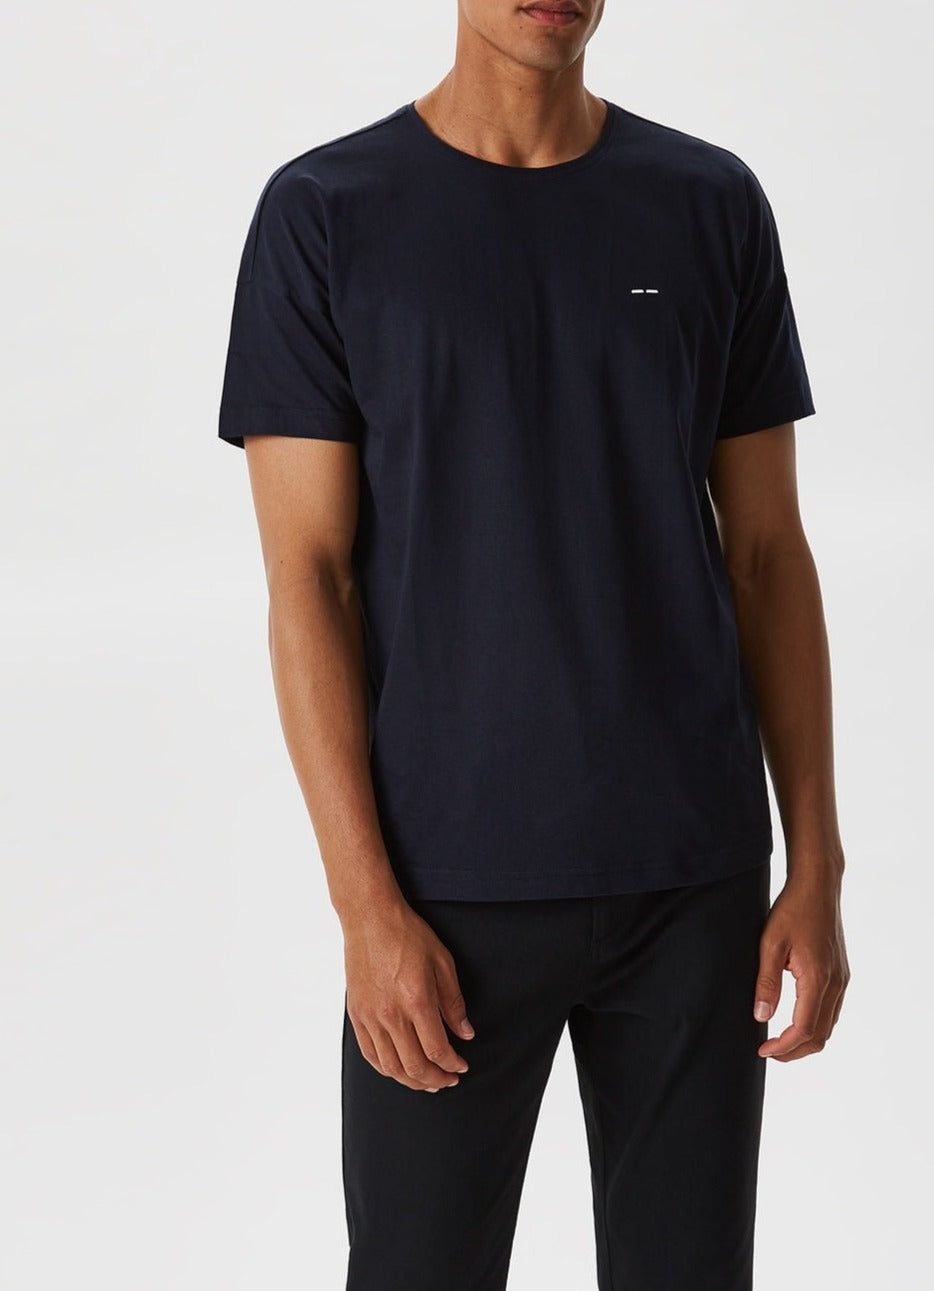 Men T-Shirt (Short Sleeve) | Navy Blue Basic Cotton T-Shirt With Crew Neck by Spanish designer Adolfo Dominguez